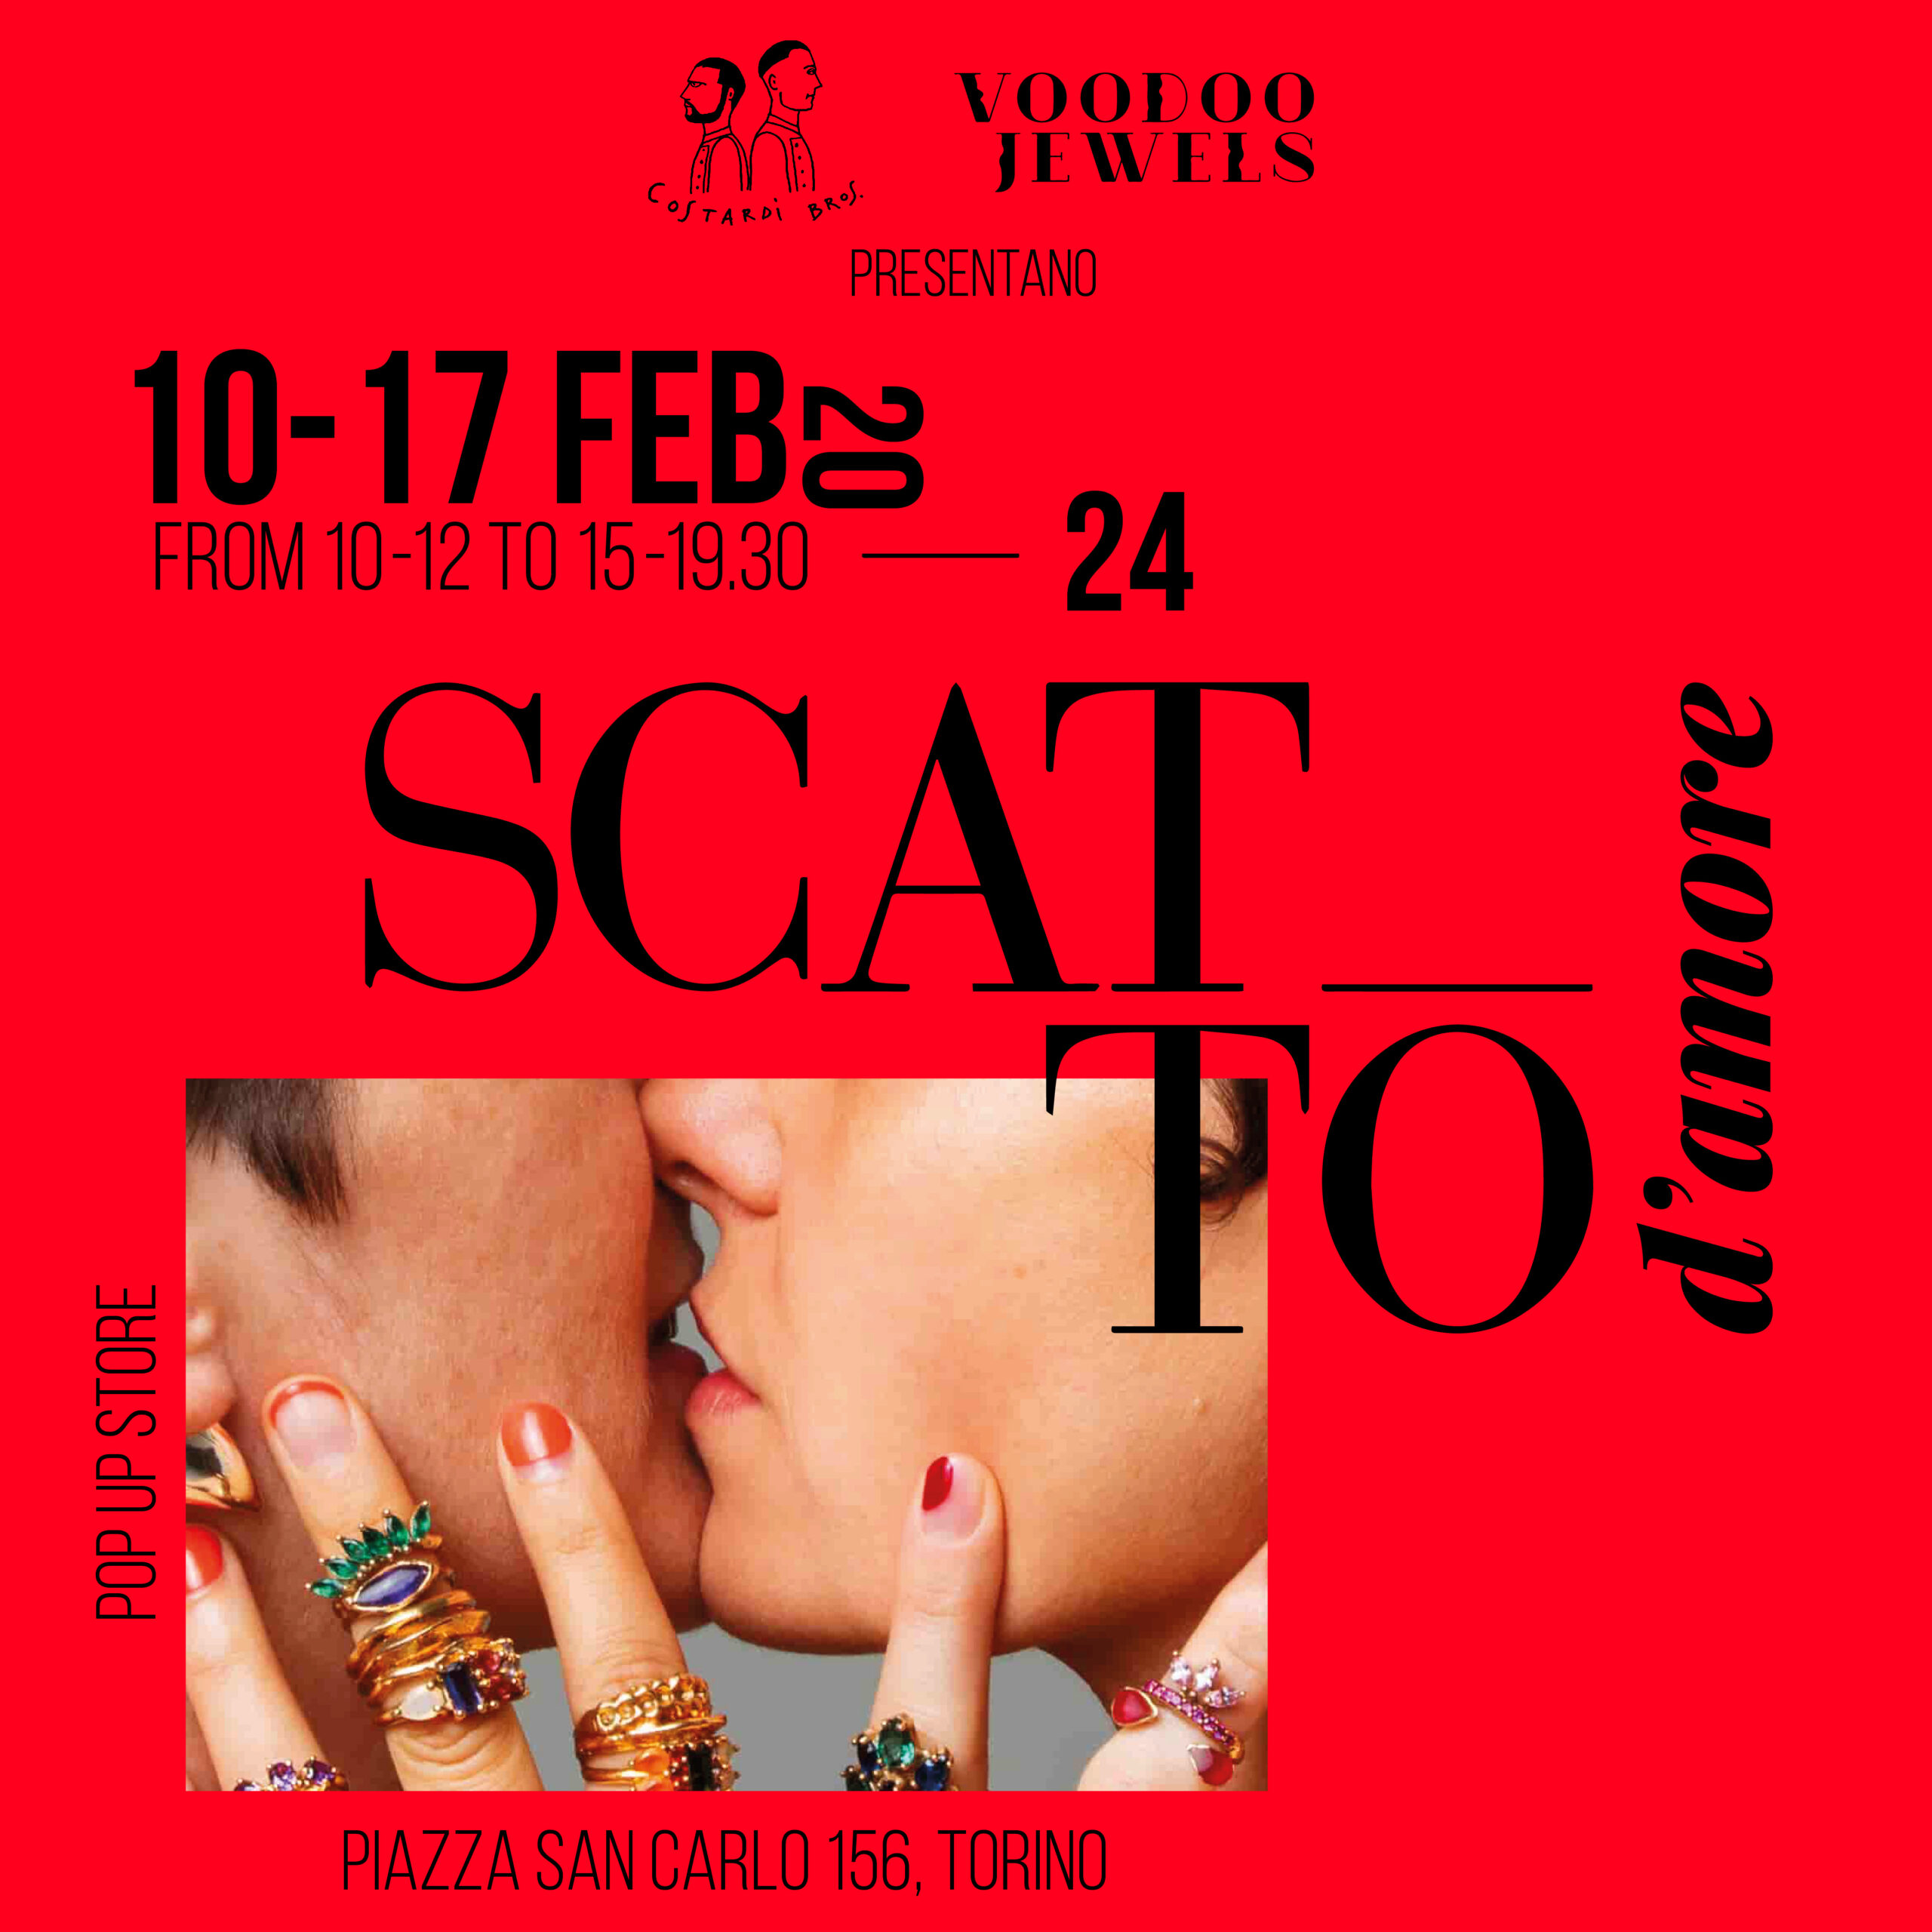 Costardi BROS & Livia Lazzari presentano “SCAT_TO D’AMORE”